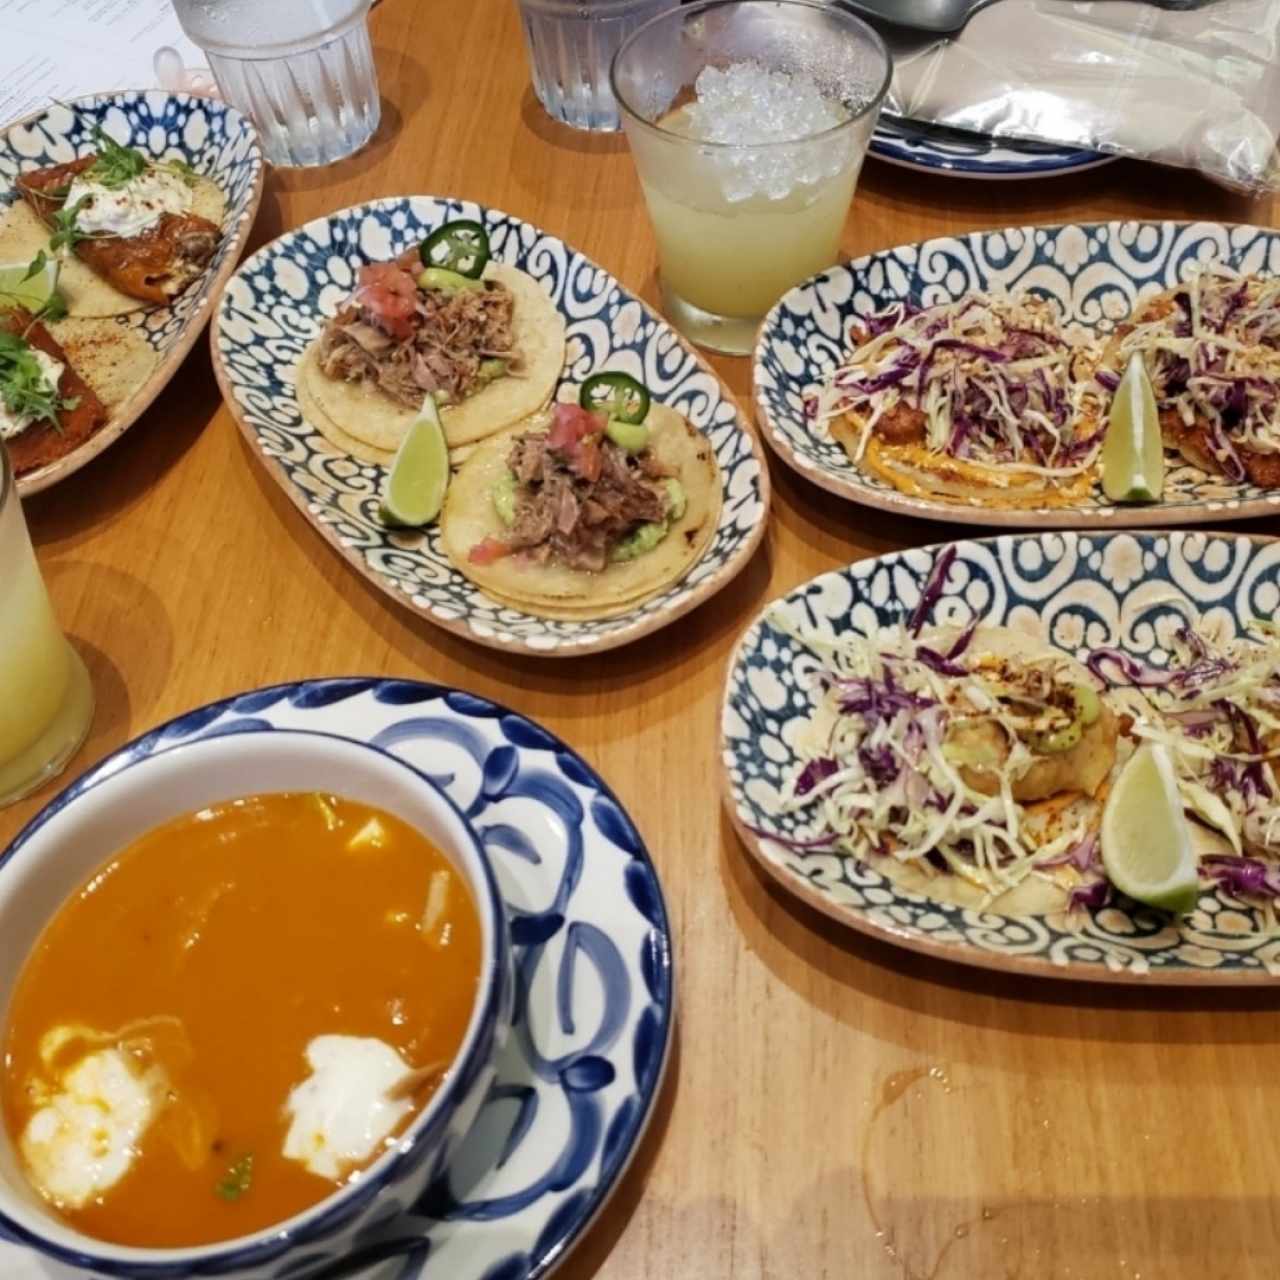 tacos gobernador, tacos de pescado, tacos de chorizo, tacos de carnitas, sopa de tortilla, jugo de Piña y jengibre